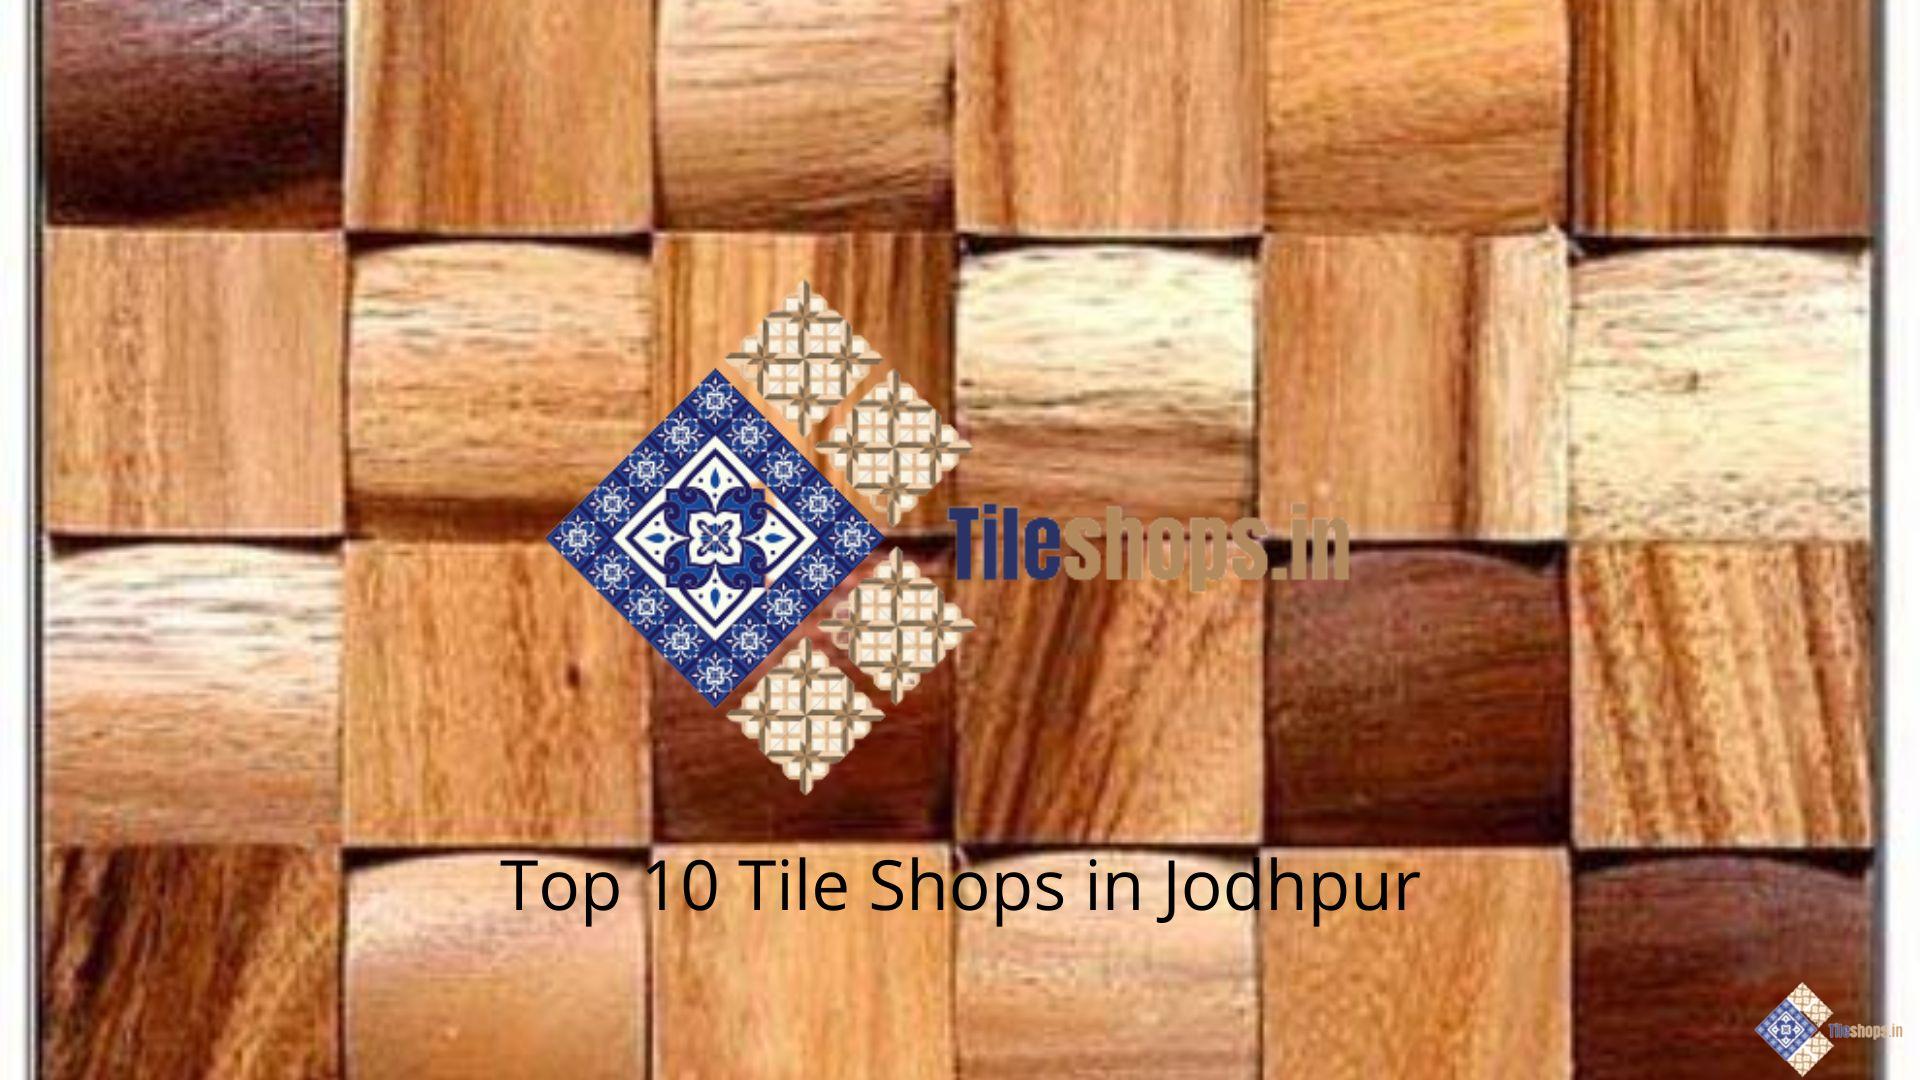 Top 10 Tile Shops in Jodhpur